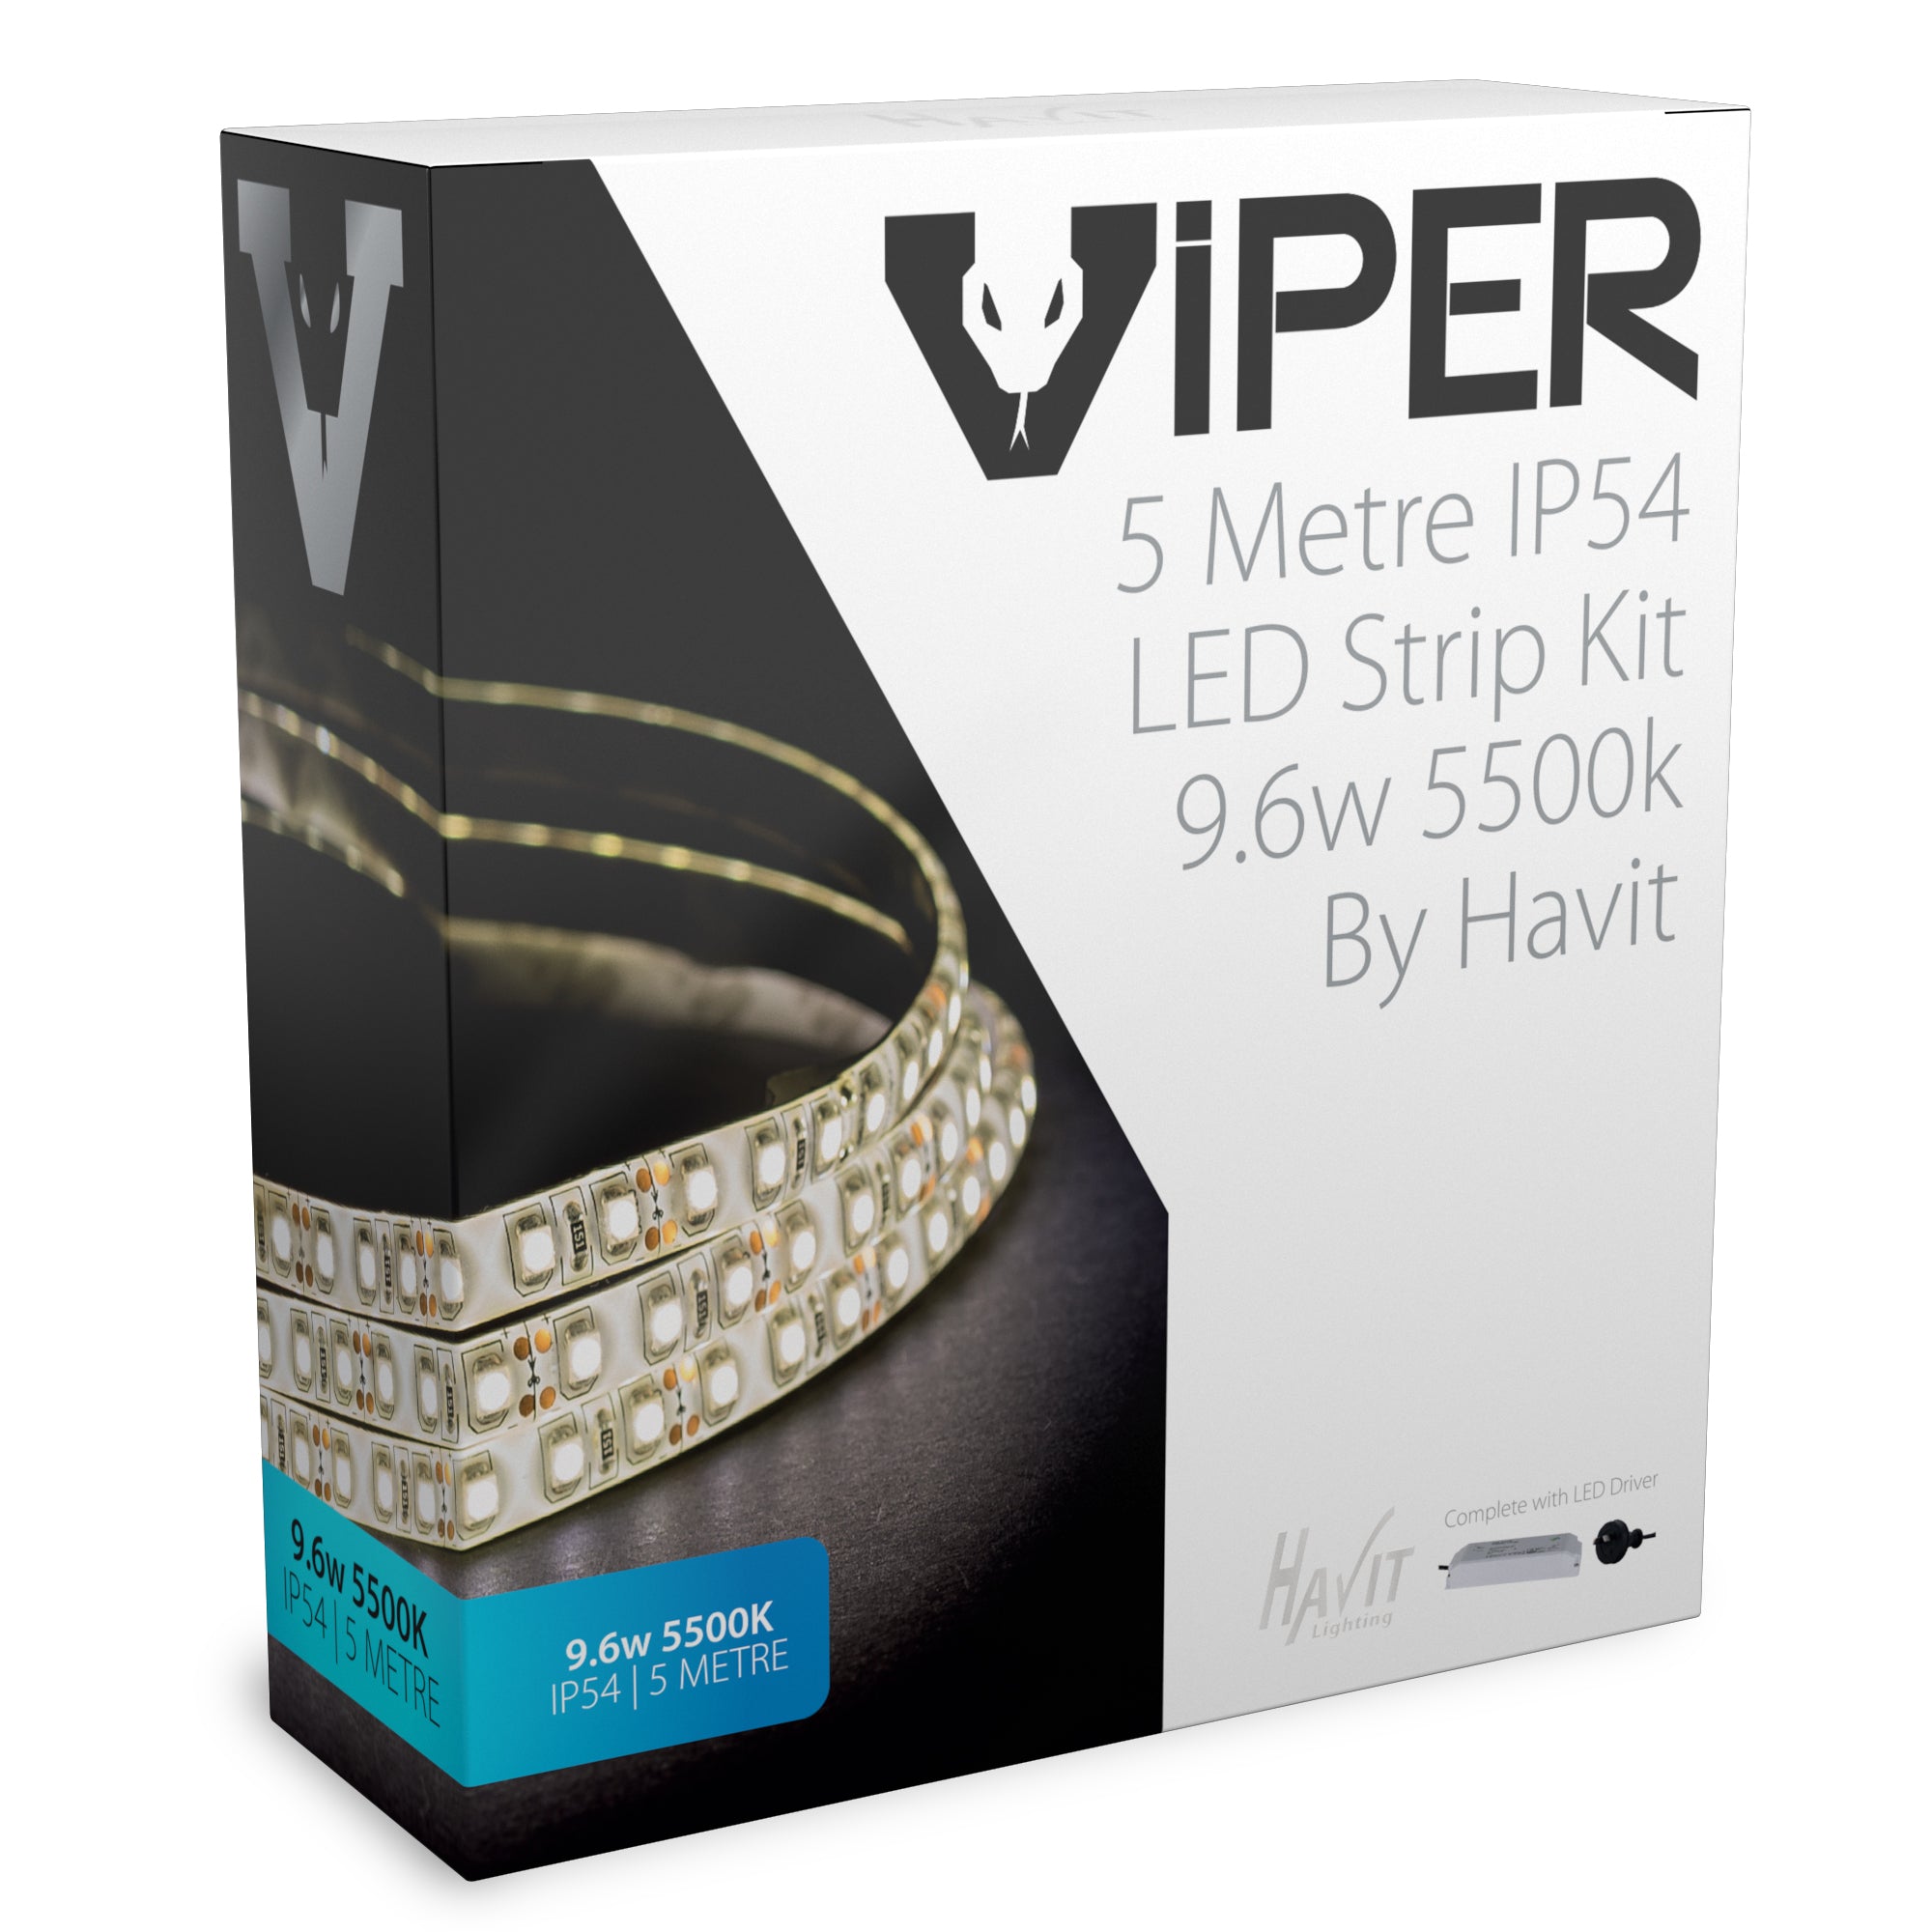 VPR9744IP54-120-5M - VIPER 9.6w 5m LED Strip kit 5500k